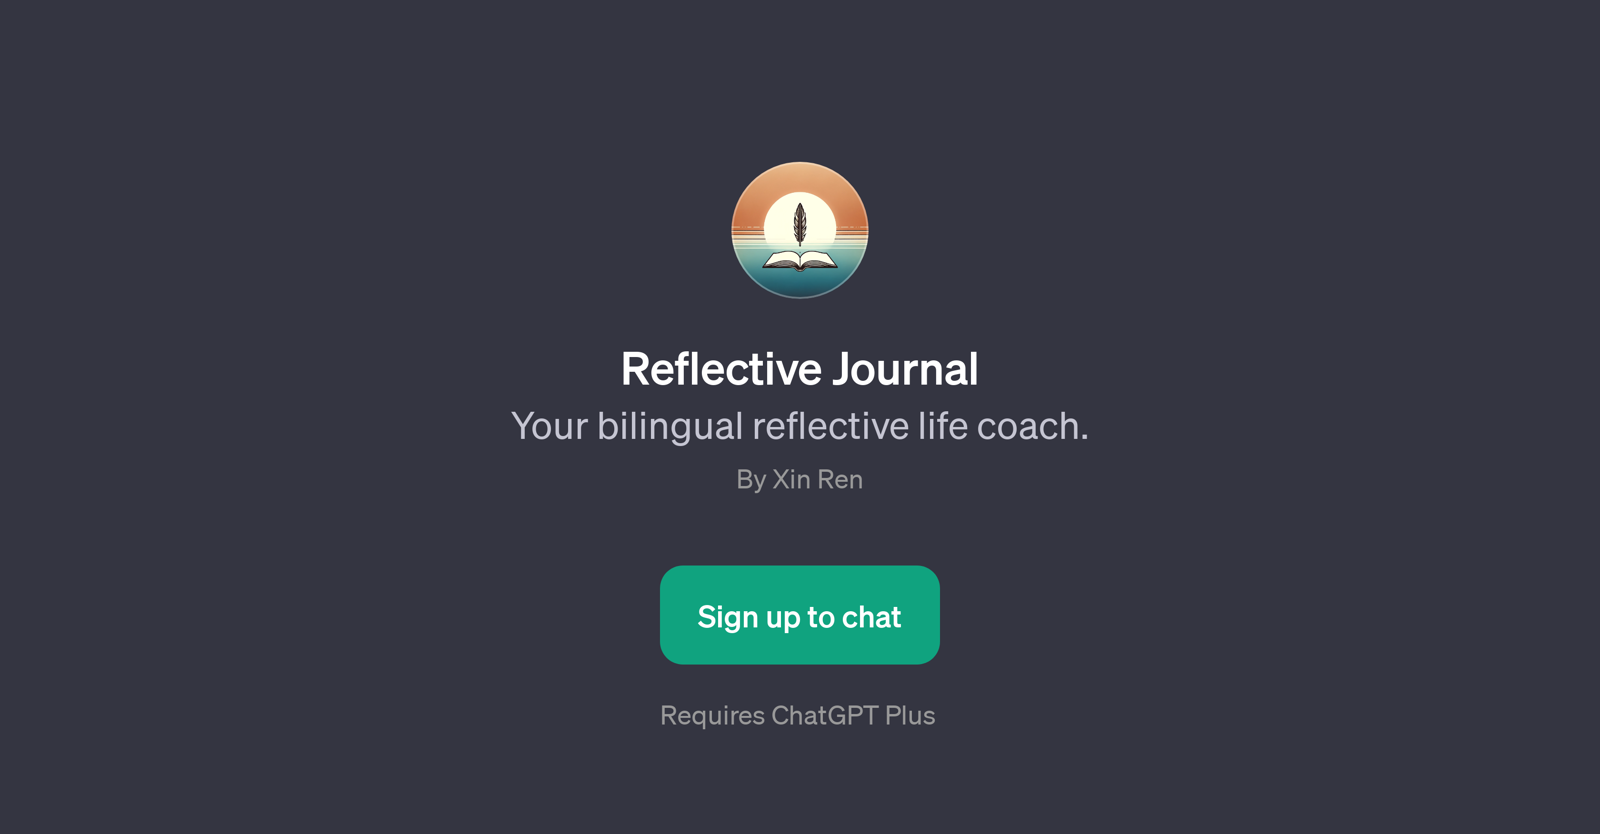 Reflective Journal website